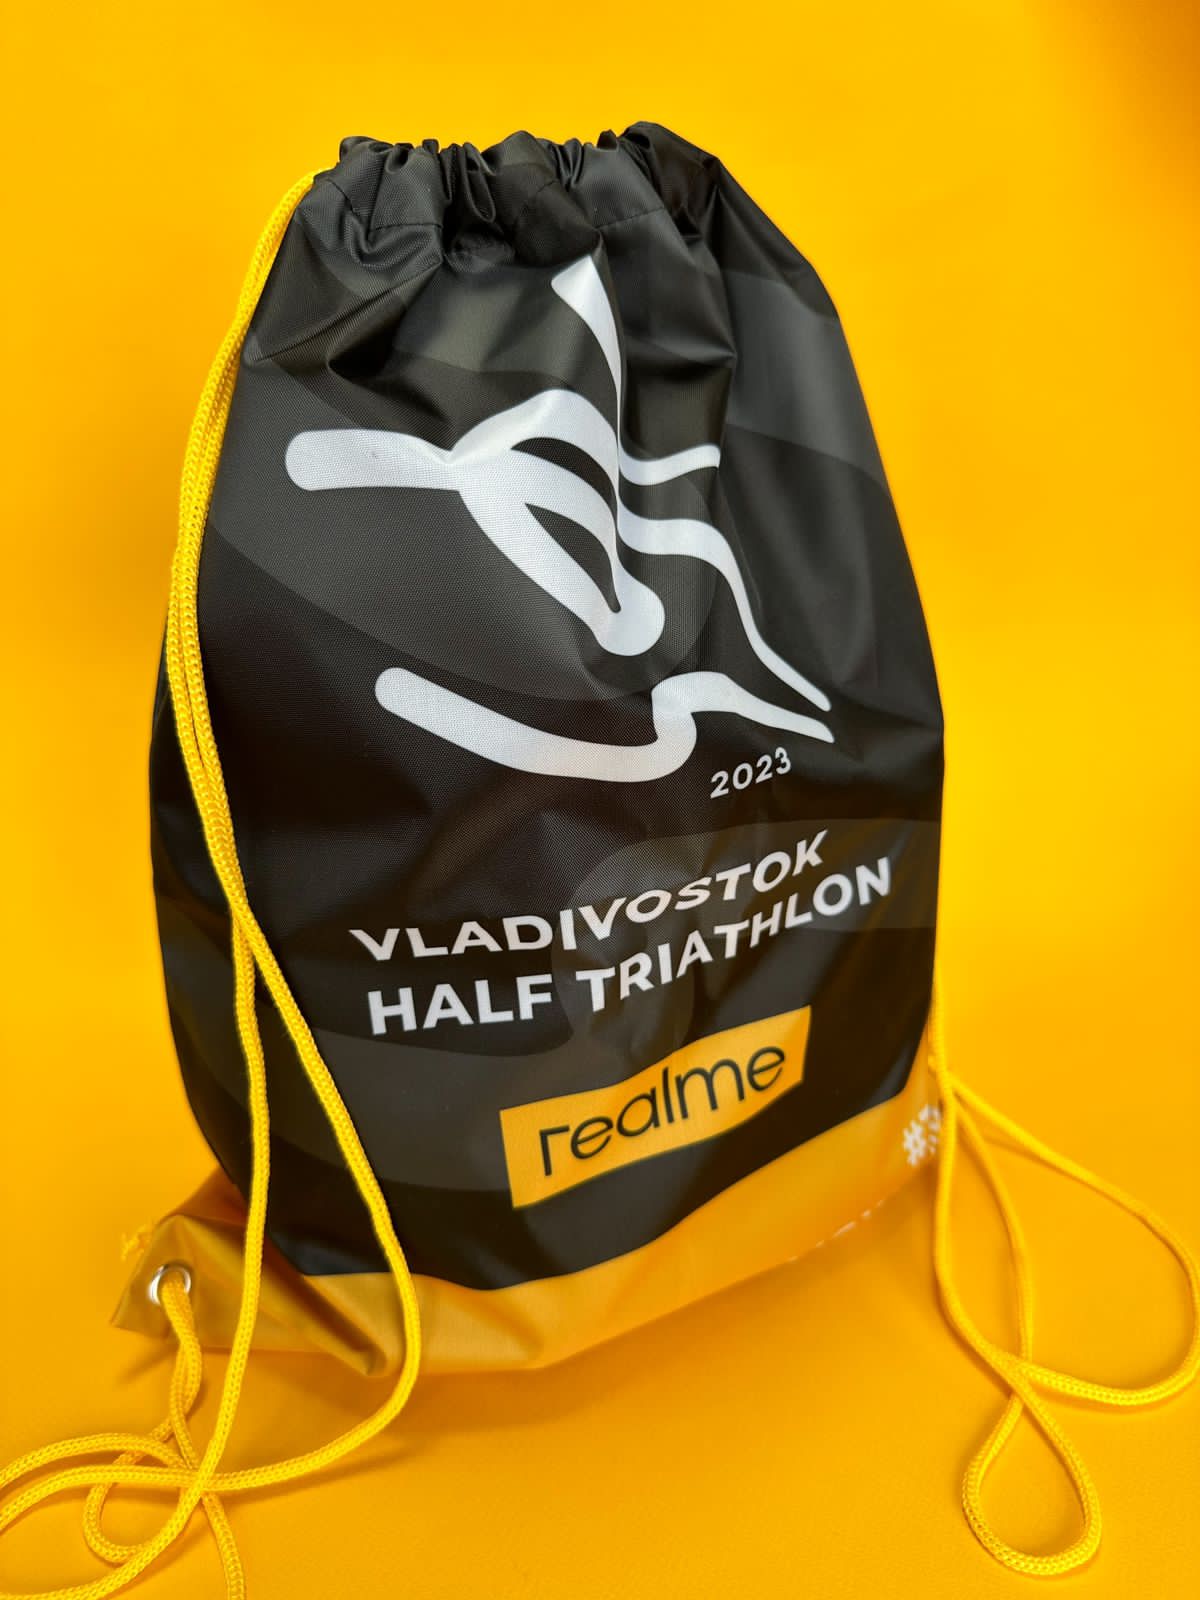 Vladivostok Half Triathlon 